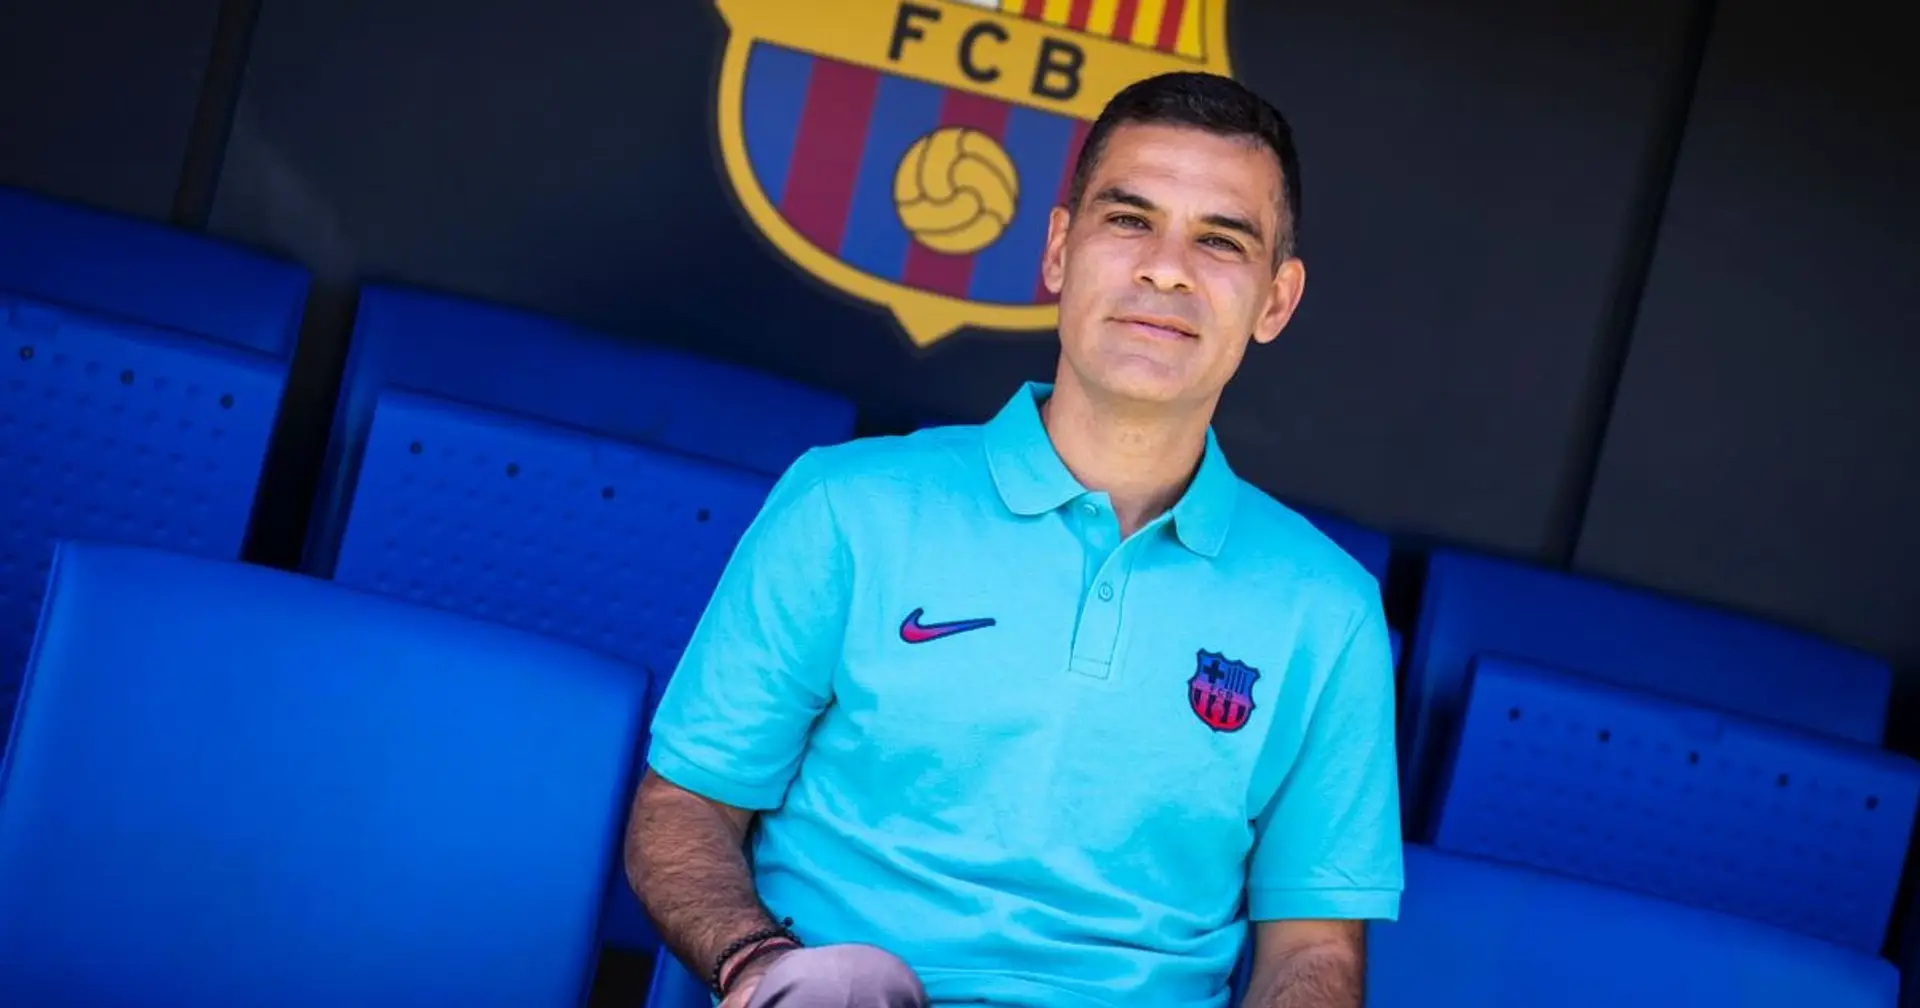 OFFICIAL: Rafa Marquez announced as new Barca Atletic coach